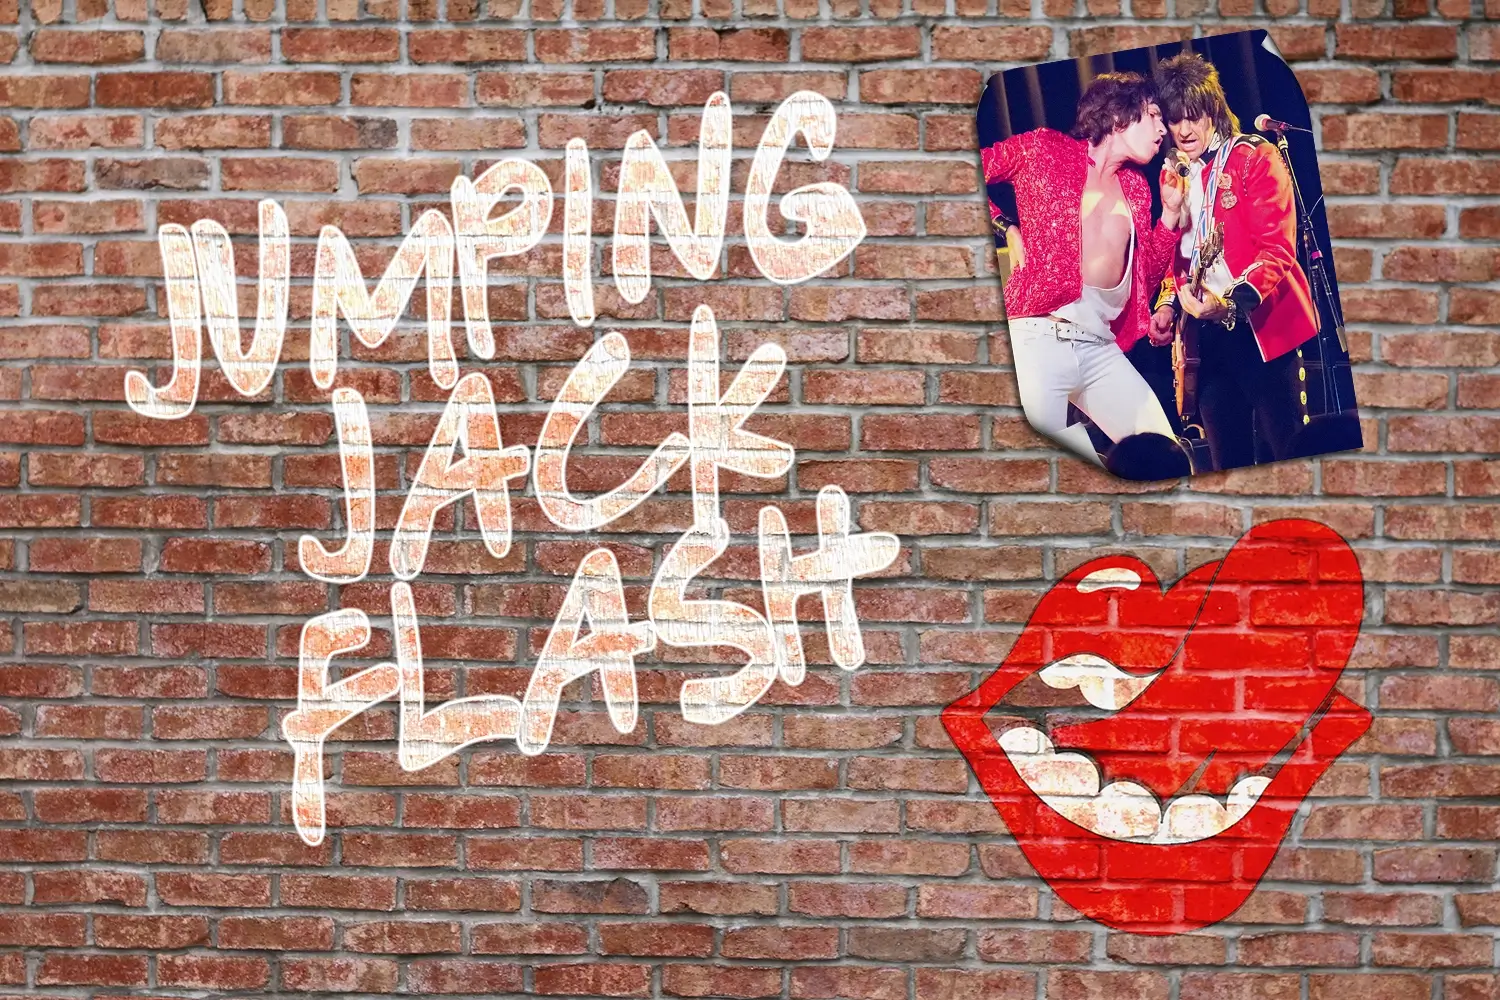 Jumping Jack Flash media